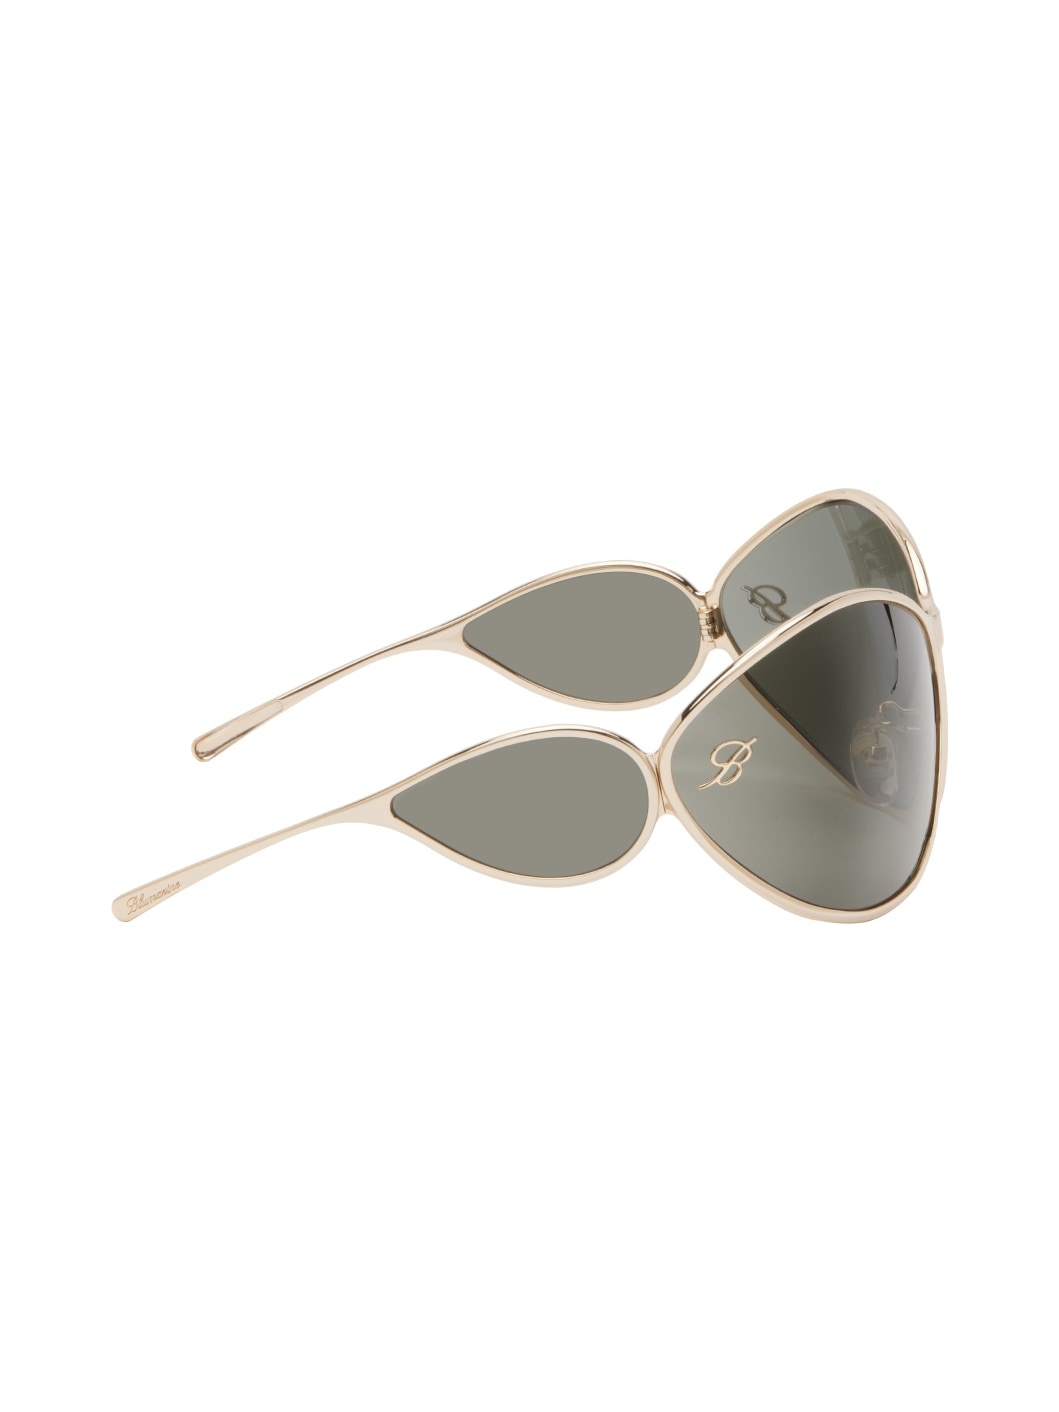 Gold Wraparound Sunglasses - 2